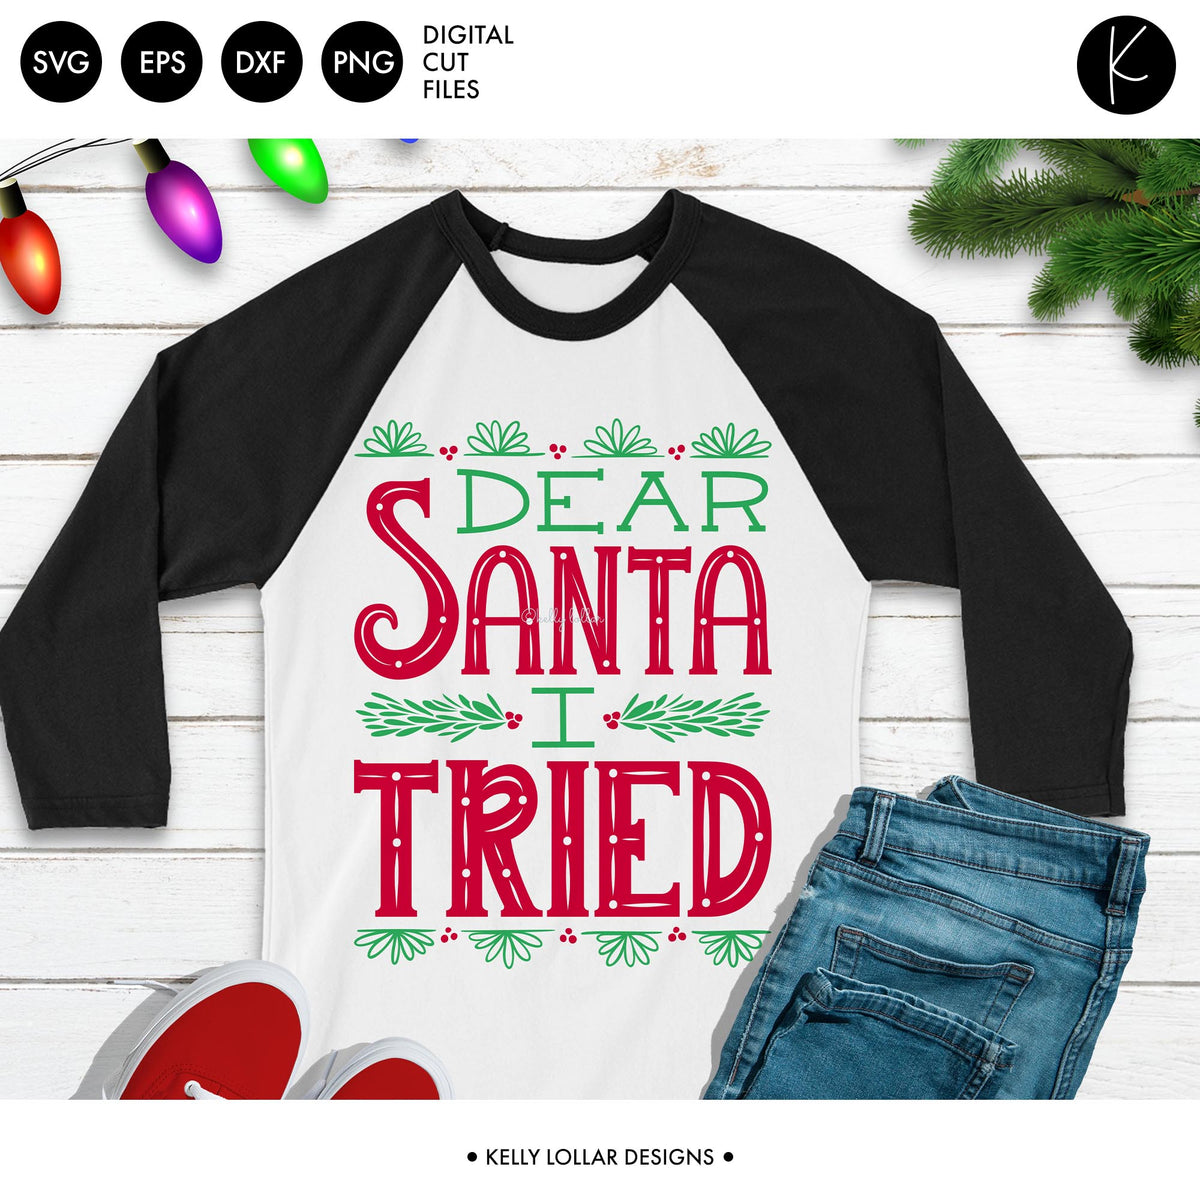 Dear Santa I Tried | SVG DXF EPS PNG Cut Files